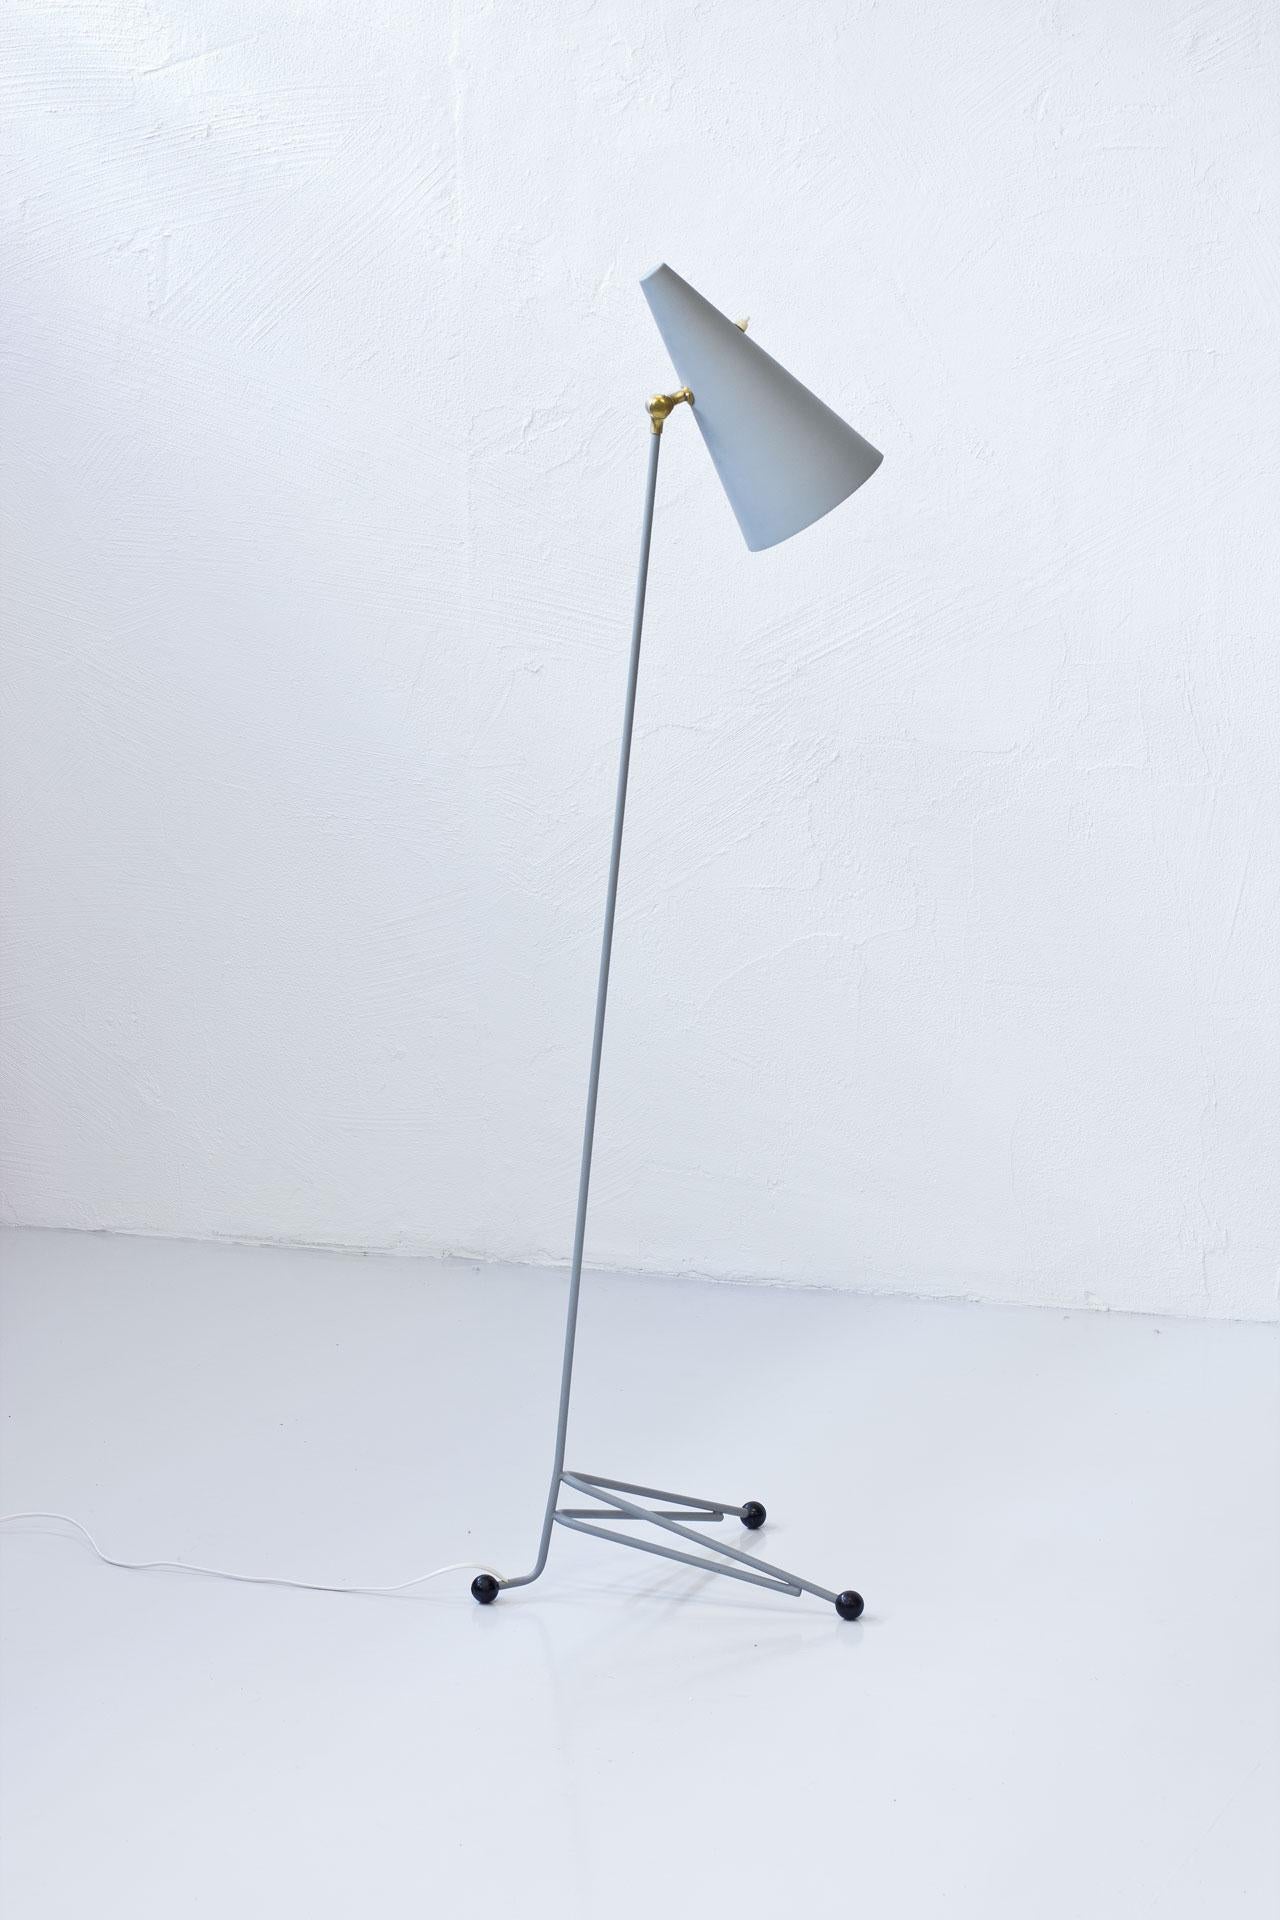 lamp in swedish